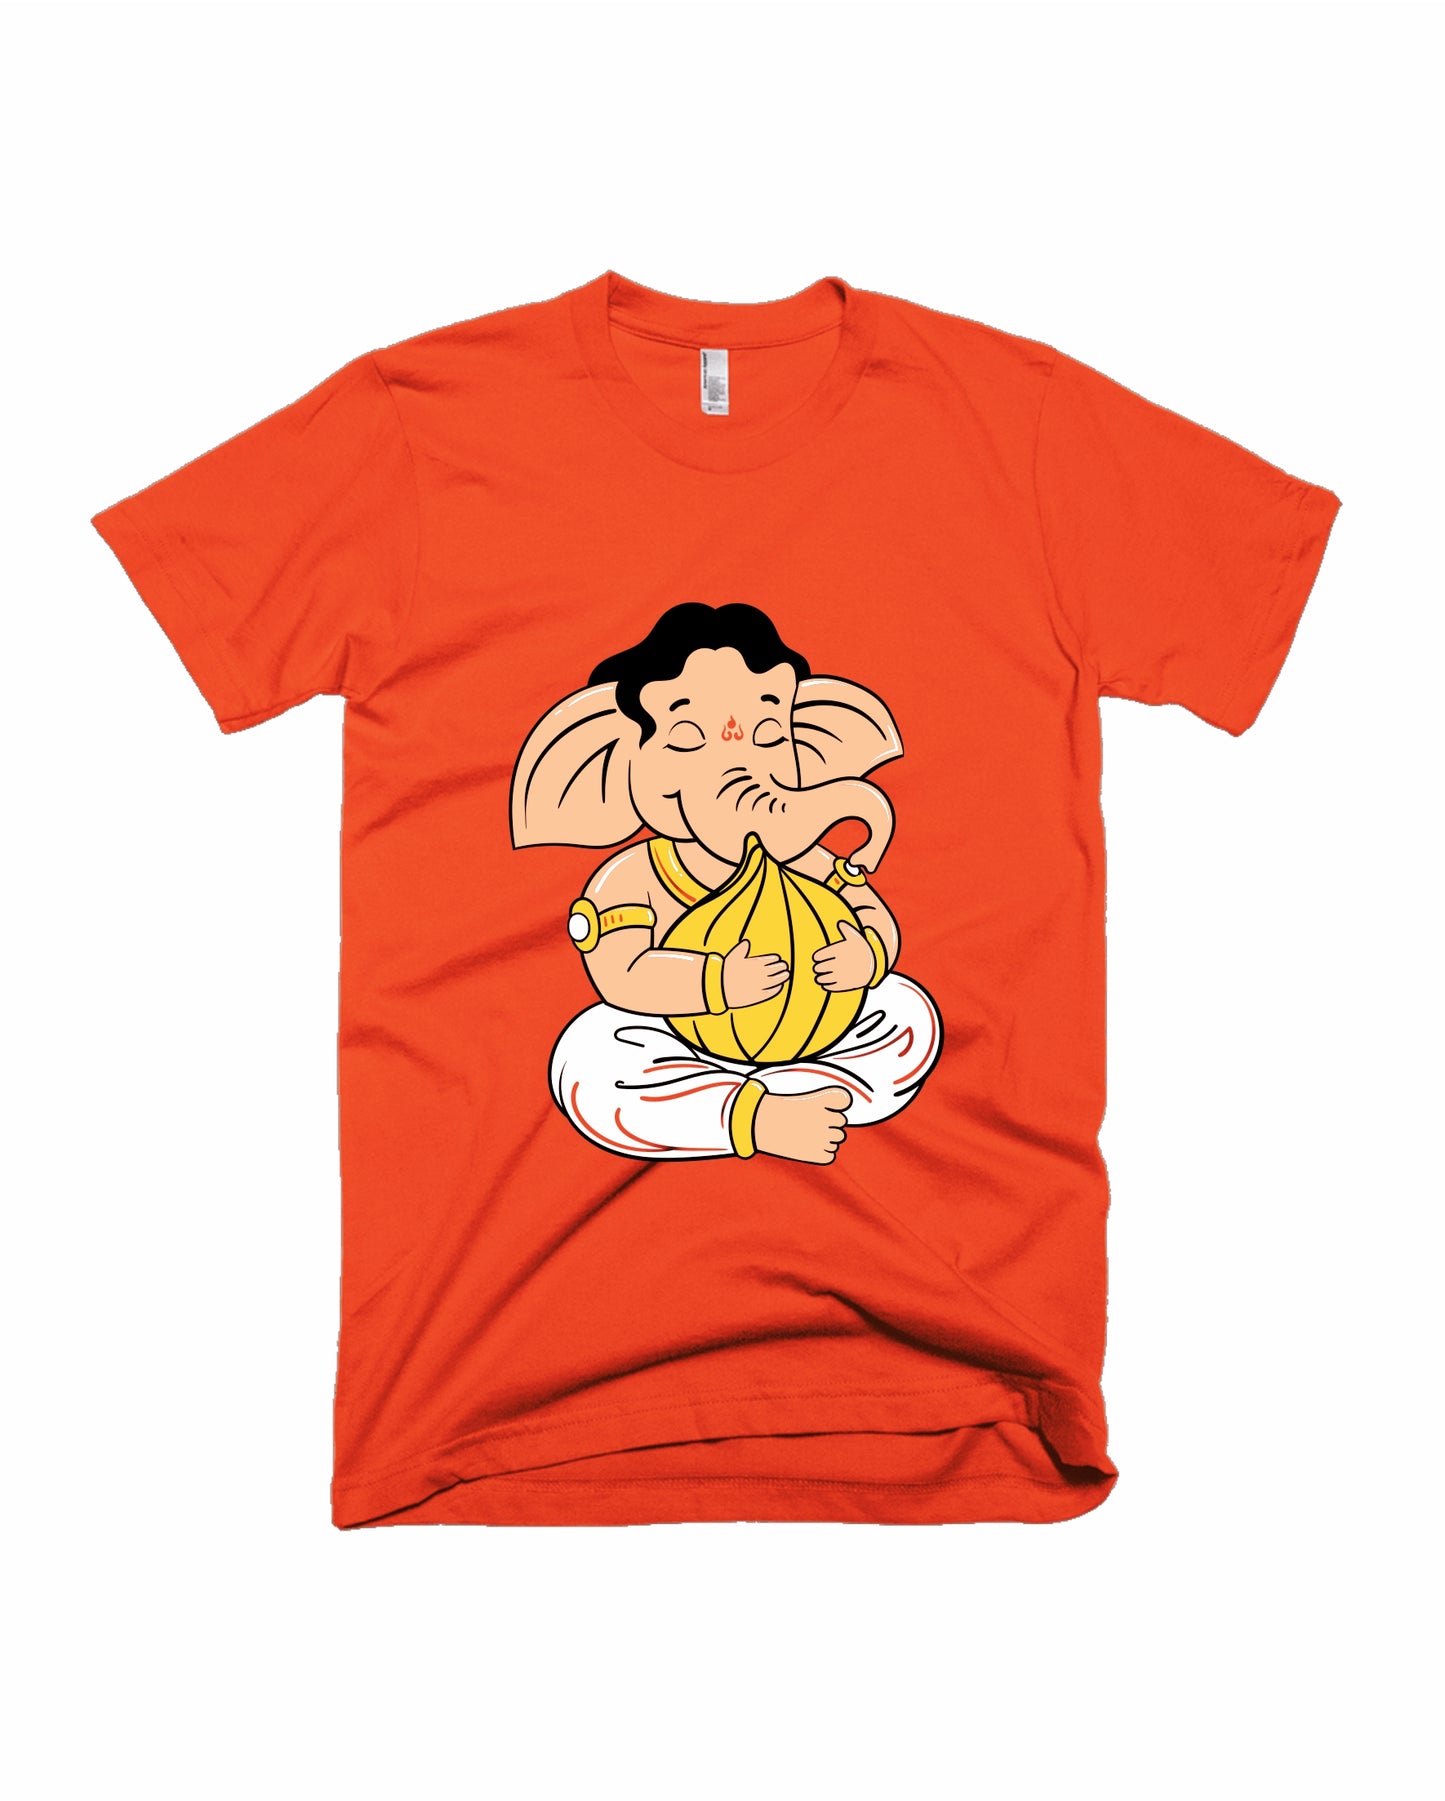 The Big Modak - Orange - Unisex Adults T-shirt